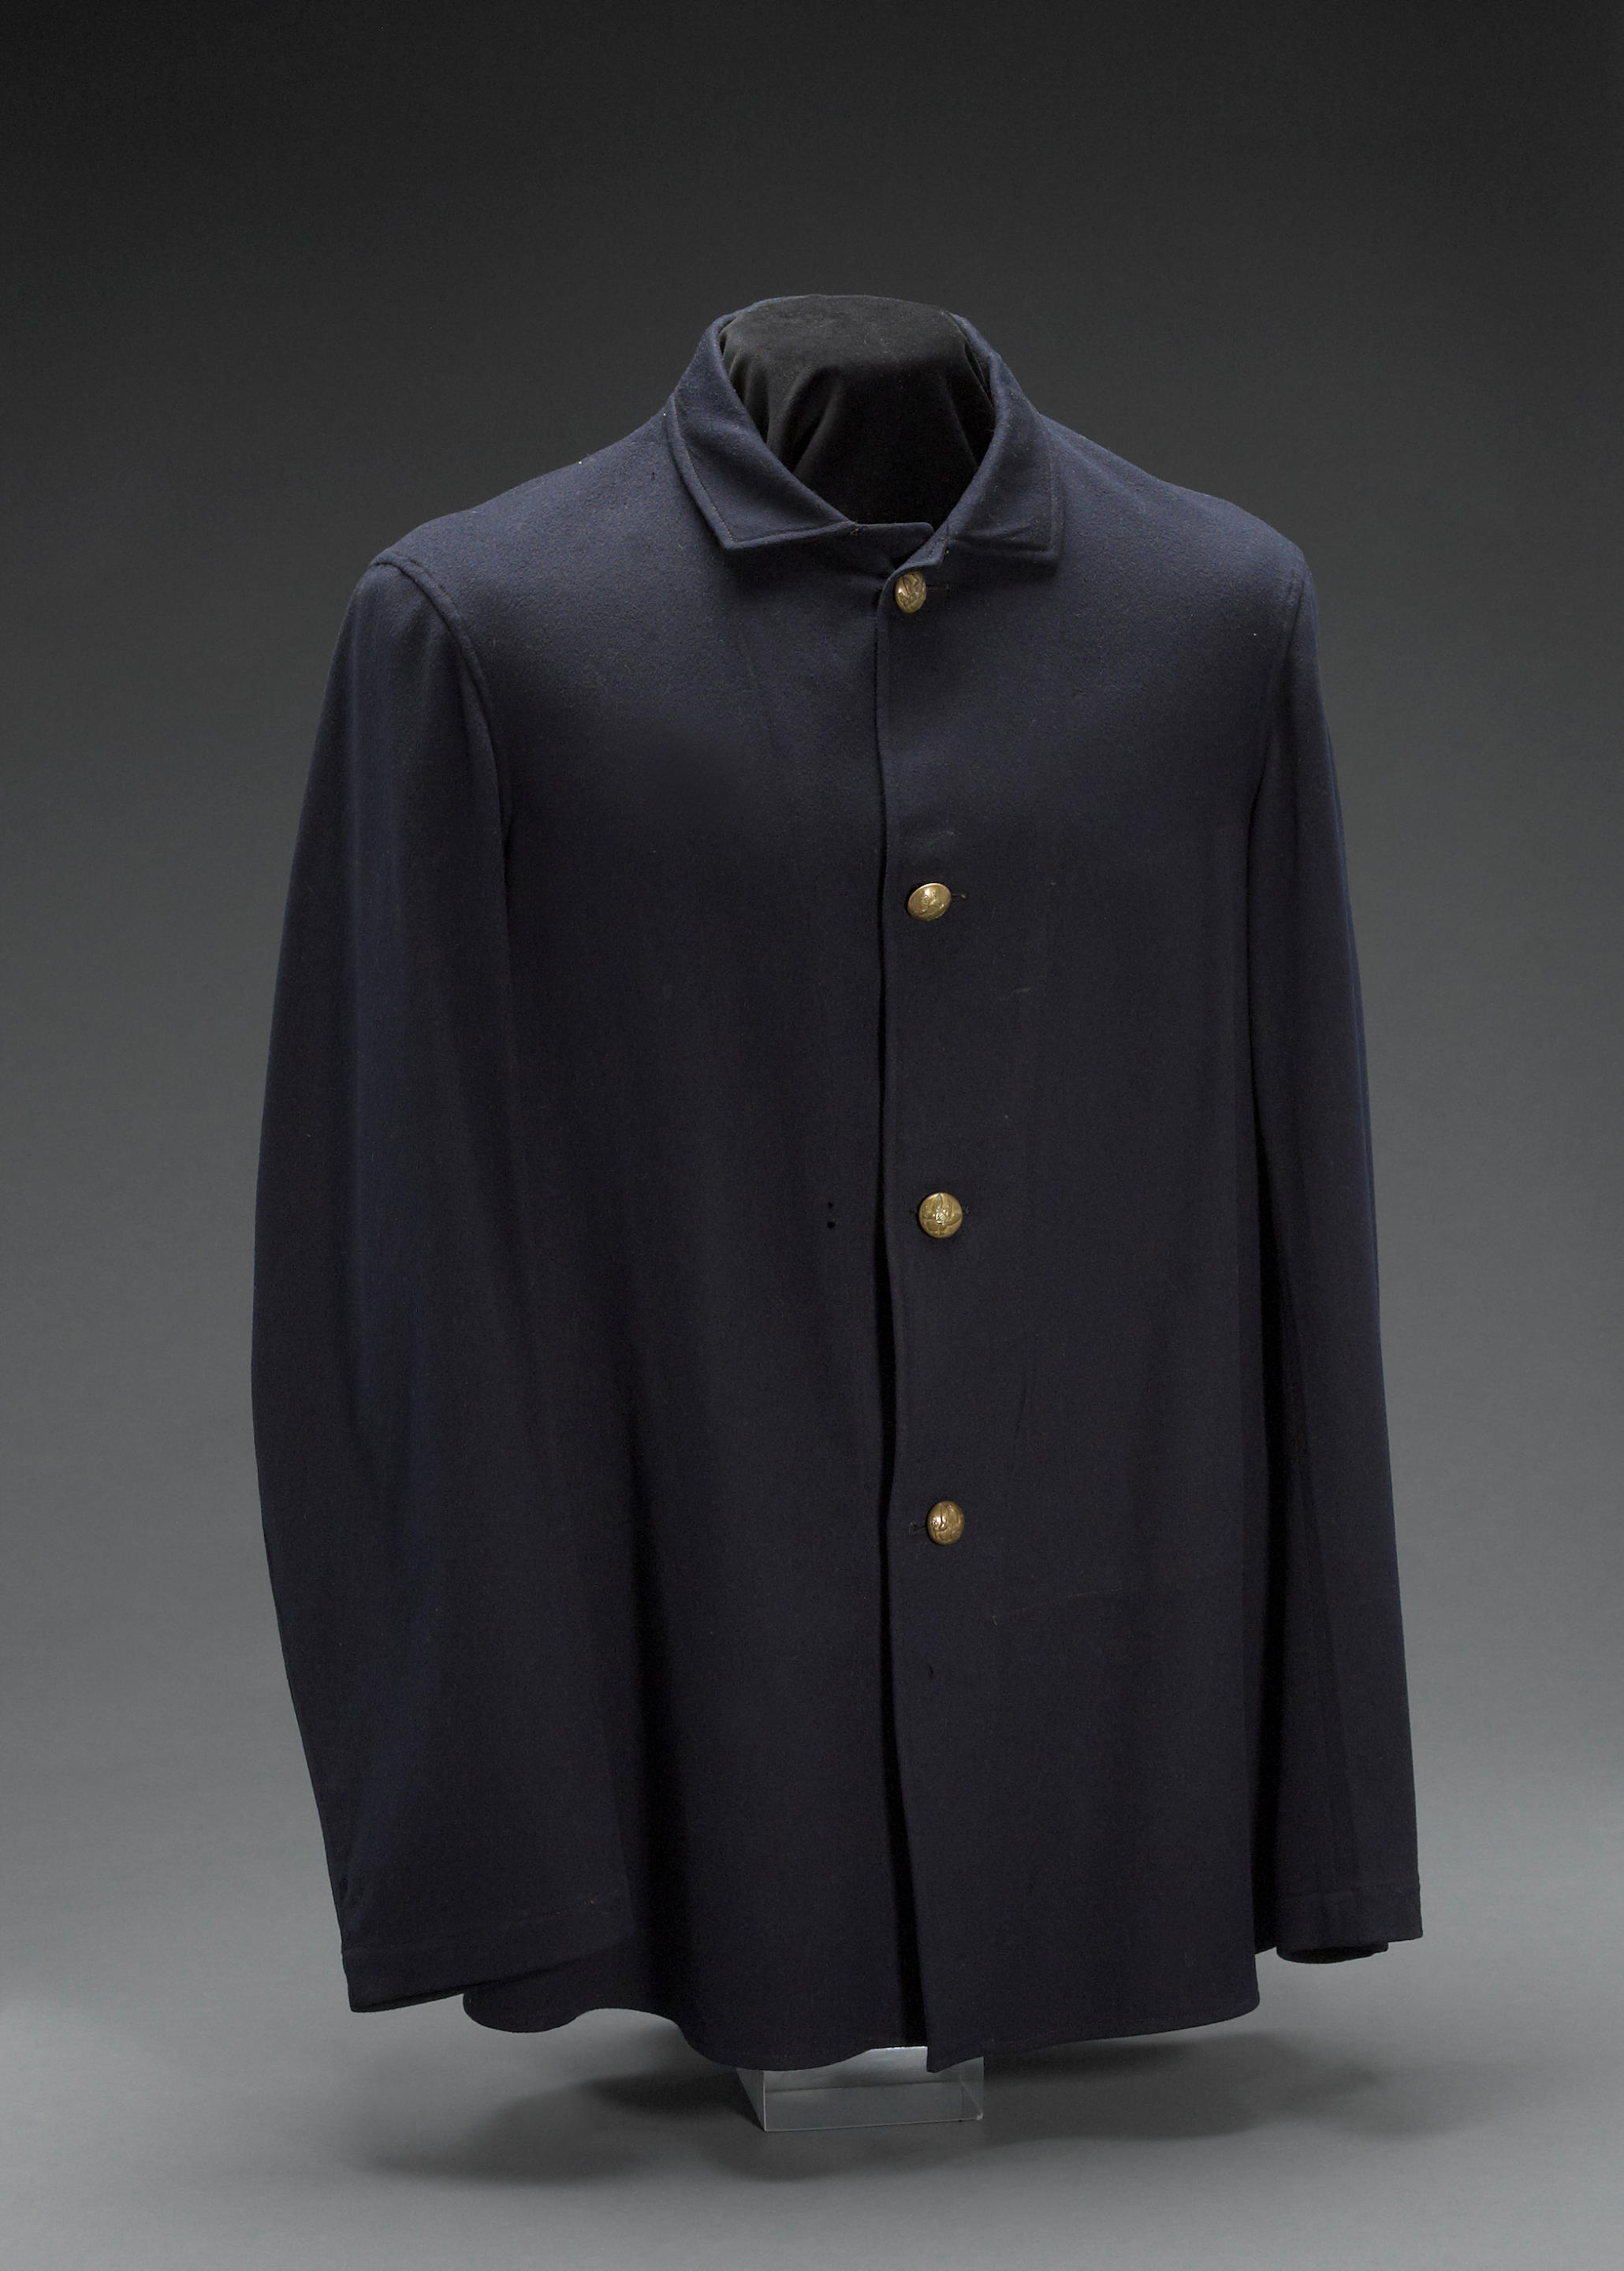 reroductions civil war navy blouse